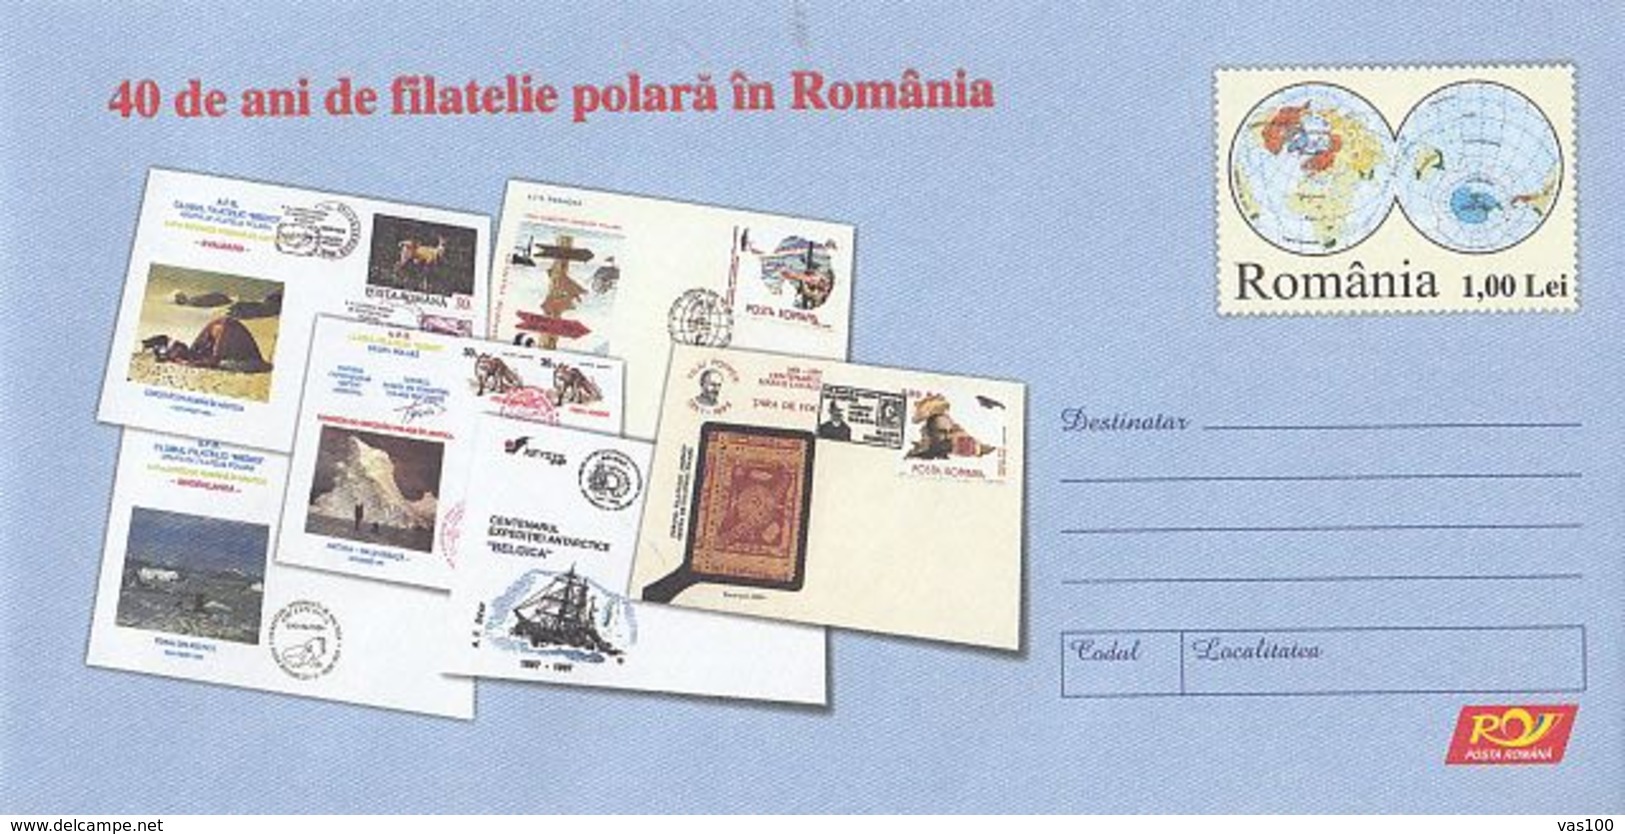 POLAR PHILATELY IN ROMANIA, PHILATELIC EXHIBITIONS, COVER STATIONERY, ENTIER POSTAL, 2008, ROMANIA - Events & Commemorations